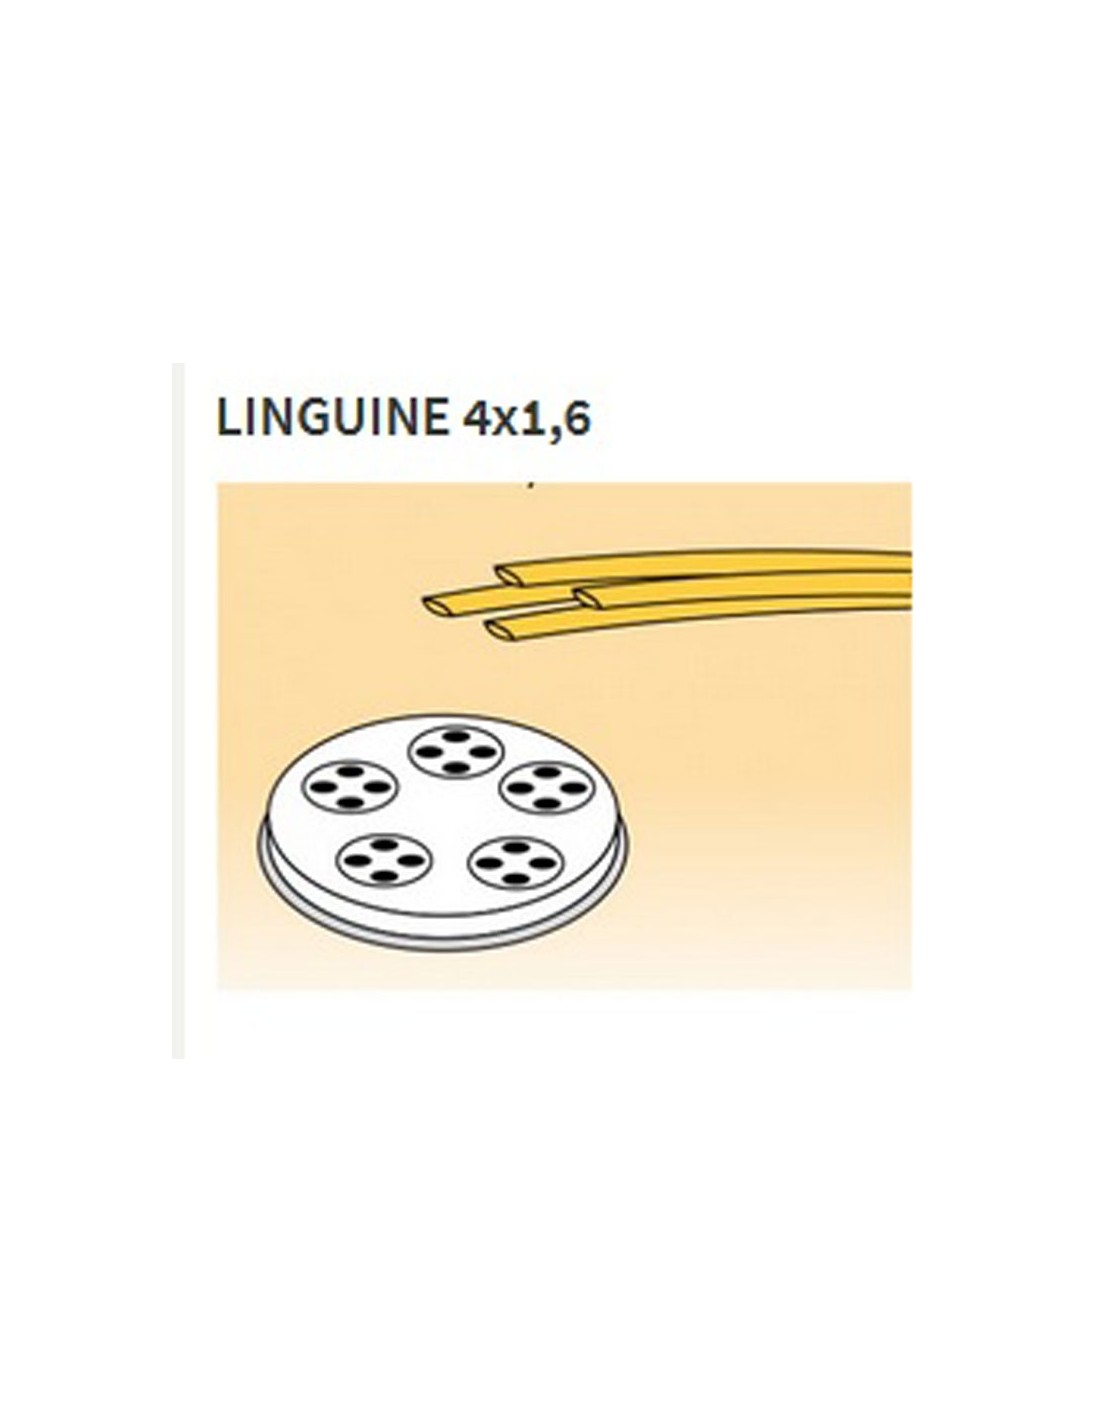 Matrices de aleación de latón de varias formas - Bronce - Para máquina de pasta fresca modelo MPF8N - Linguine 4 x 1,6 mm 4